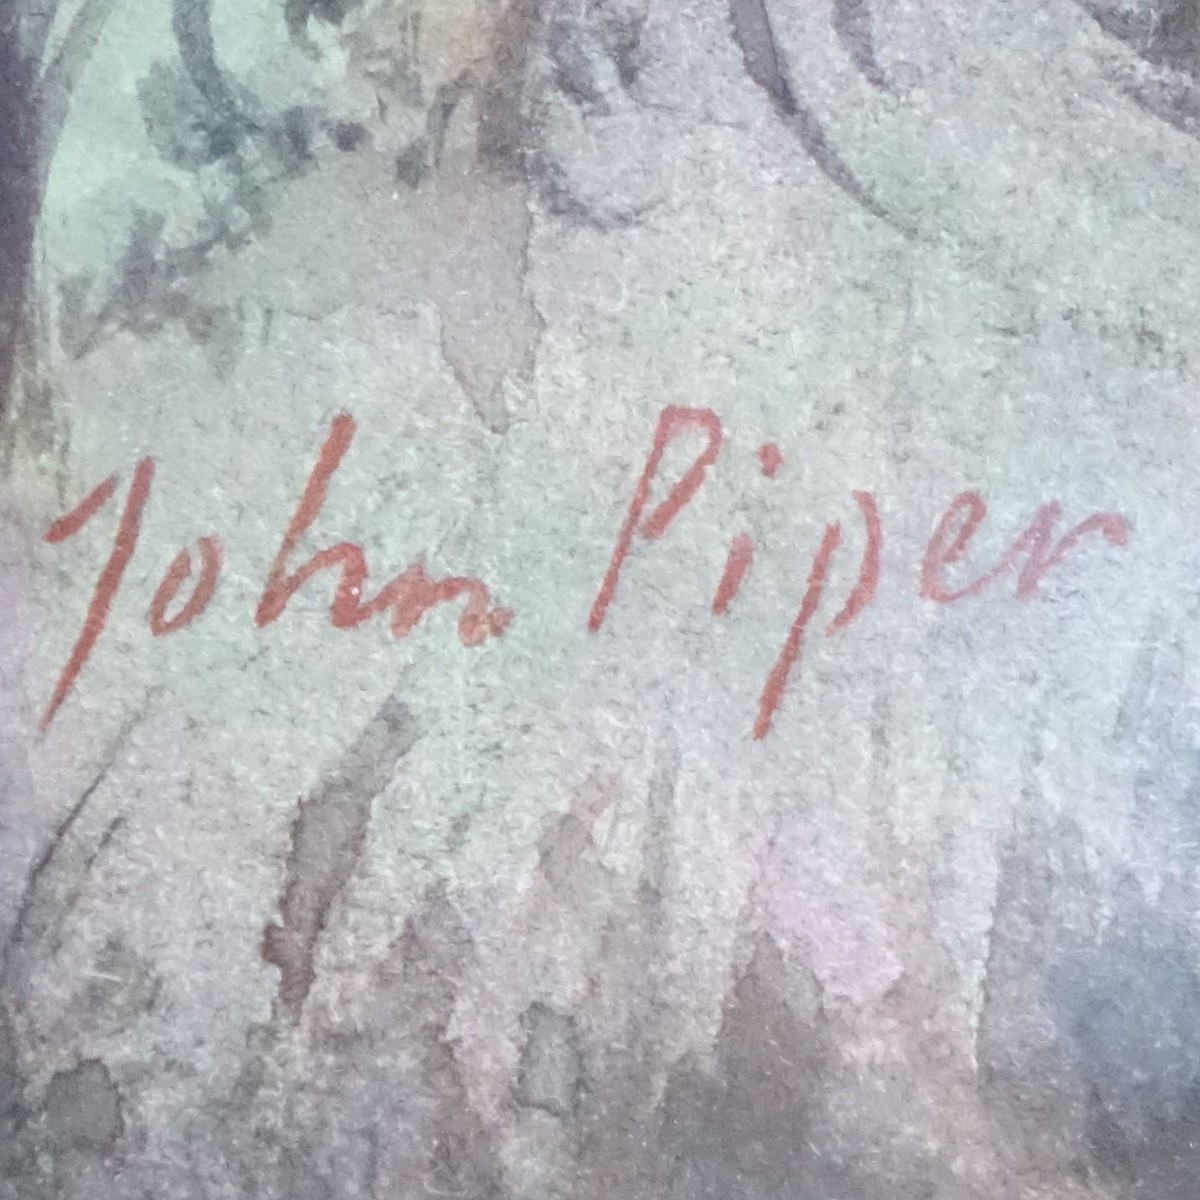 Attrib: John Piper (1903 - 1992)